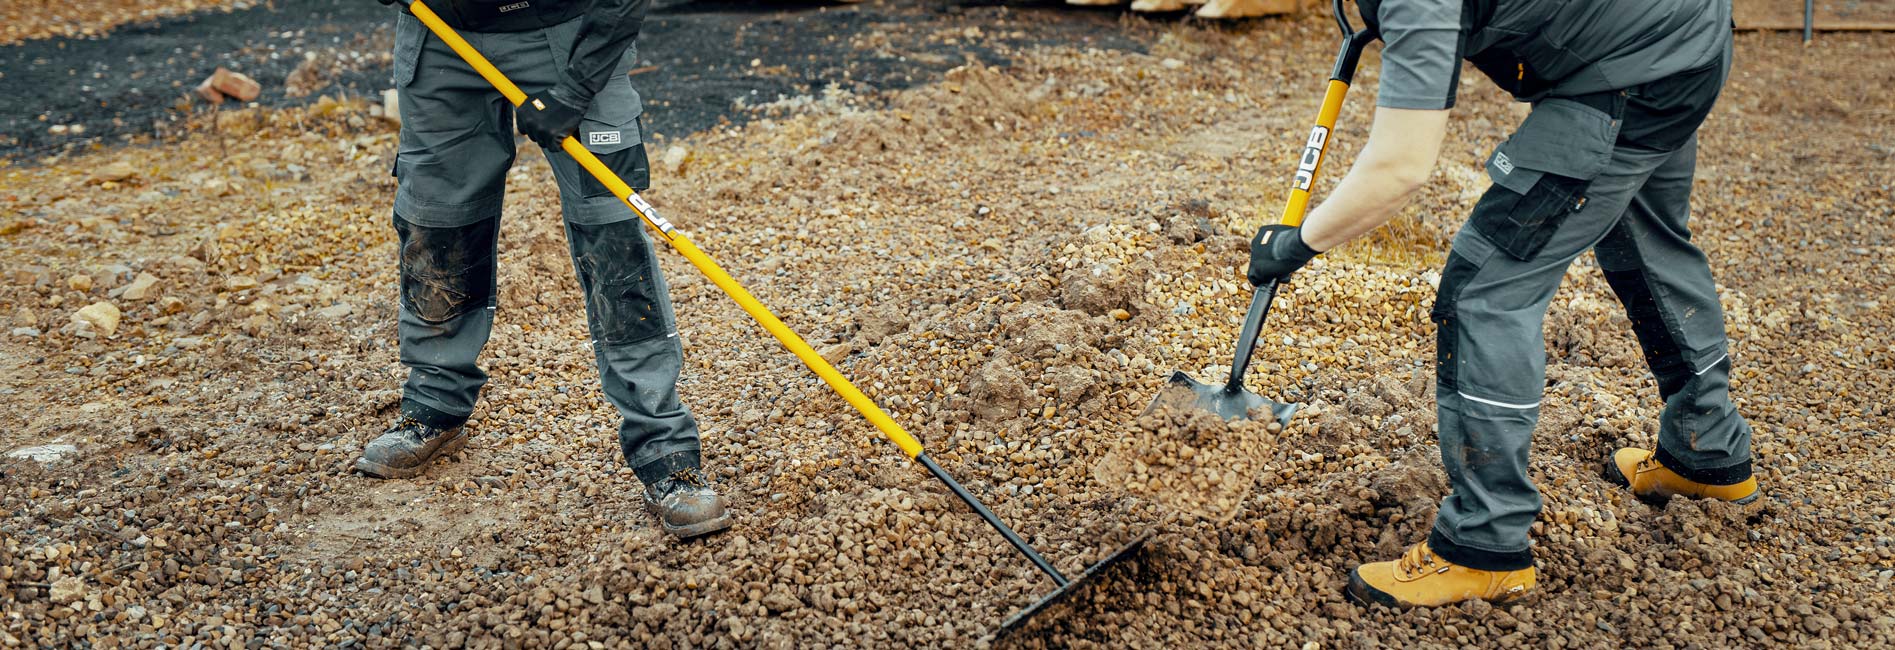 JCB Rake and shovel laying gravel